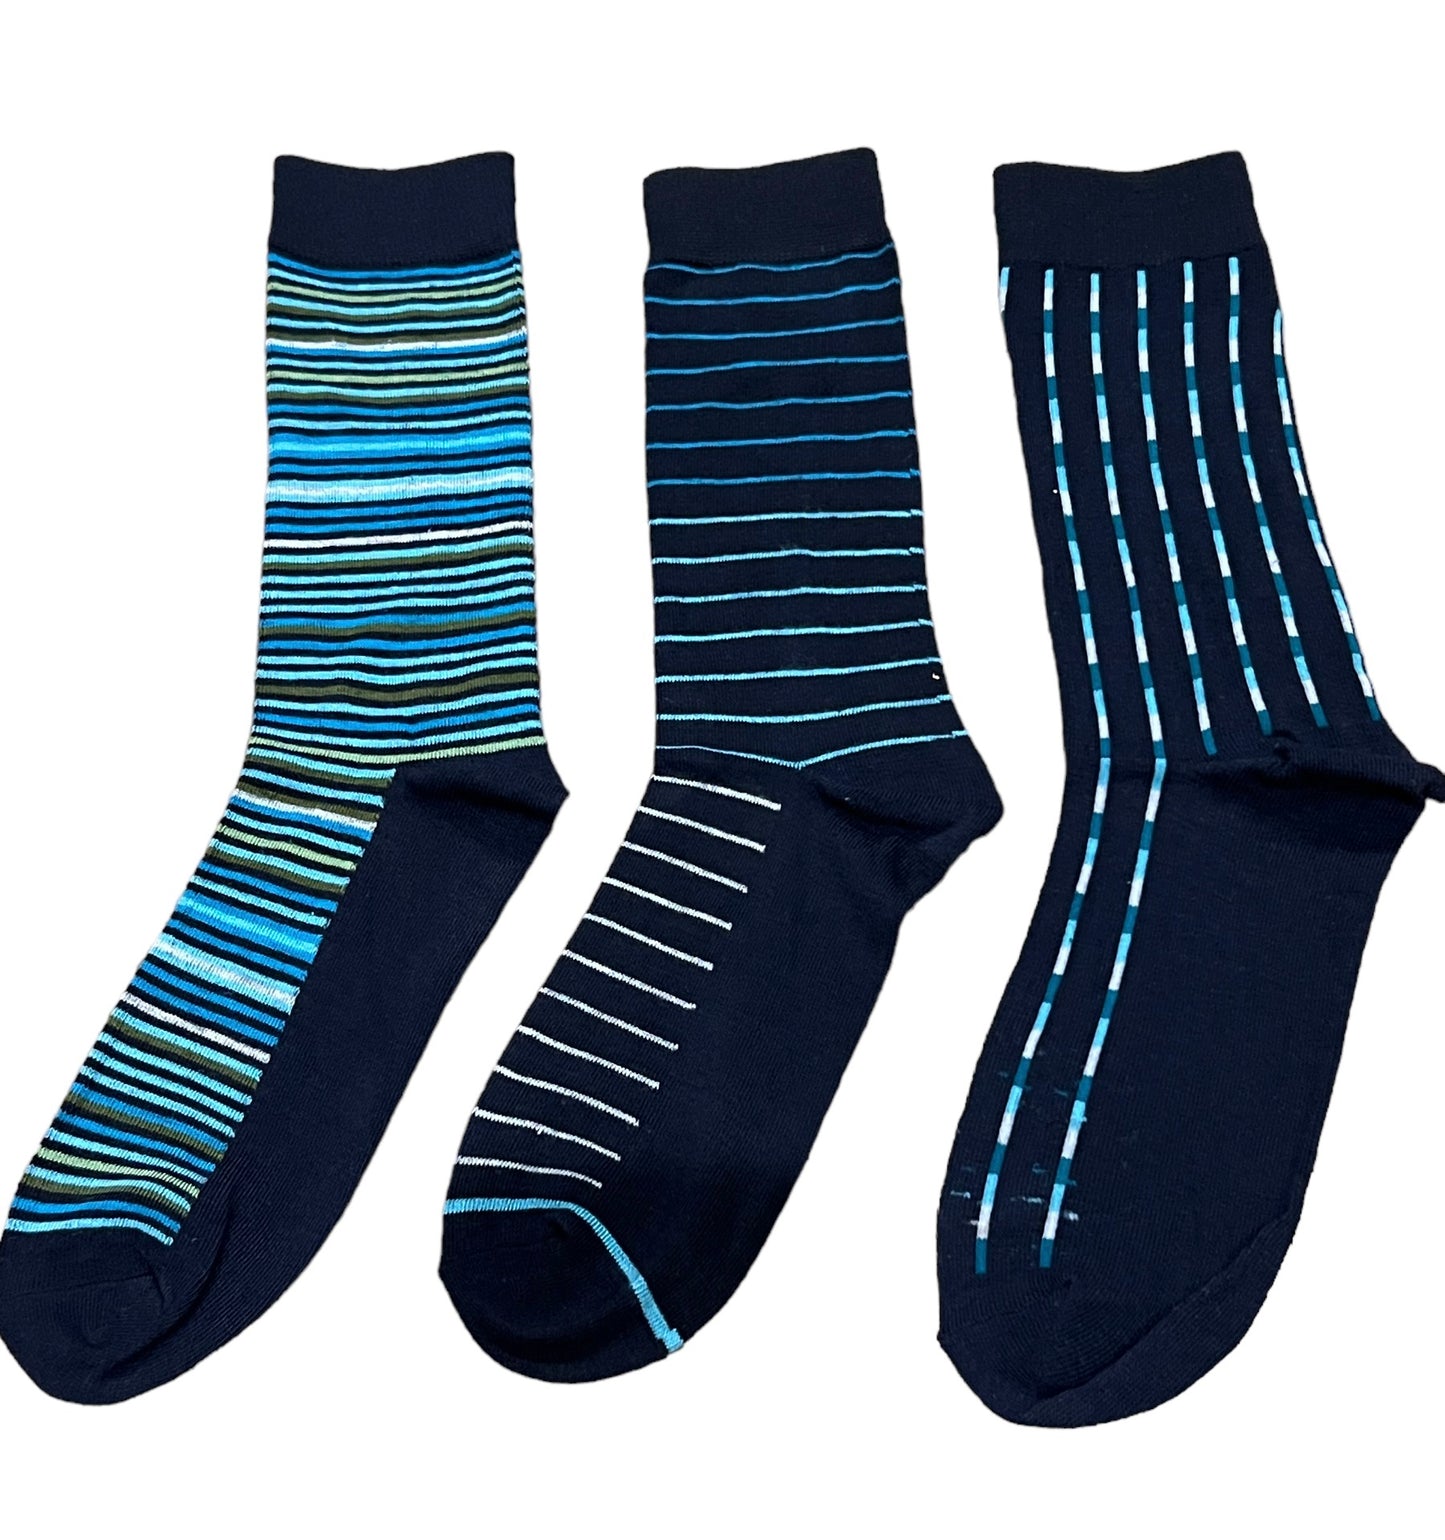 Stripes Assortment Fashion Socks in Navy 3pr Pack